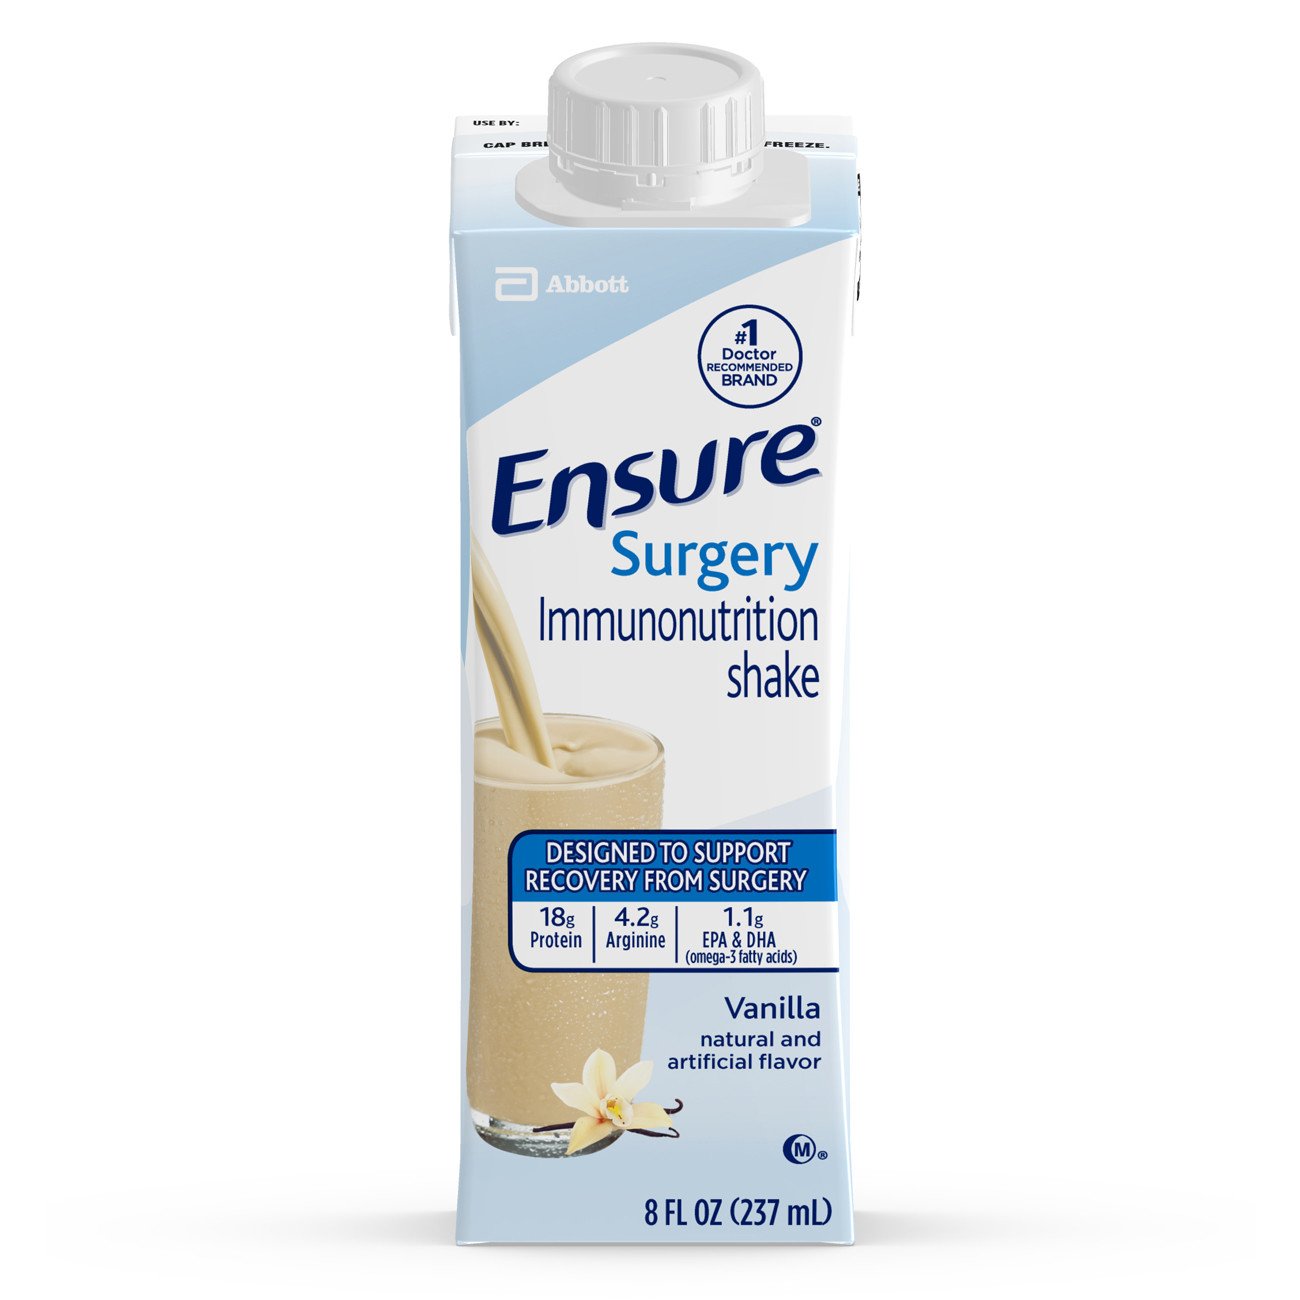 Ensure Surgery Immunonutrition Nutrition Shake, Vanilla, 8 oz. Carton -Case of 15